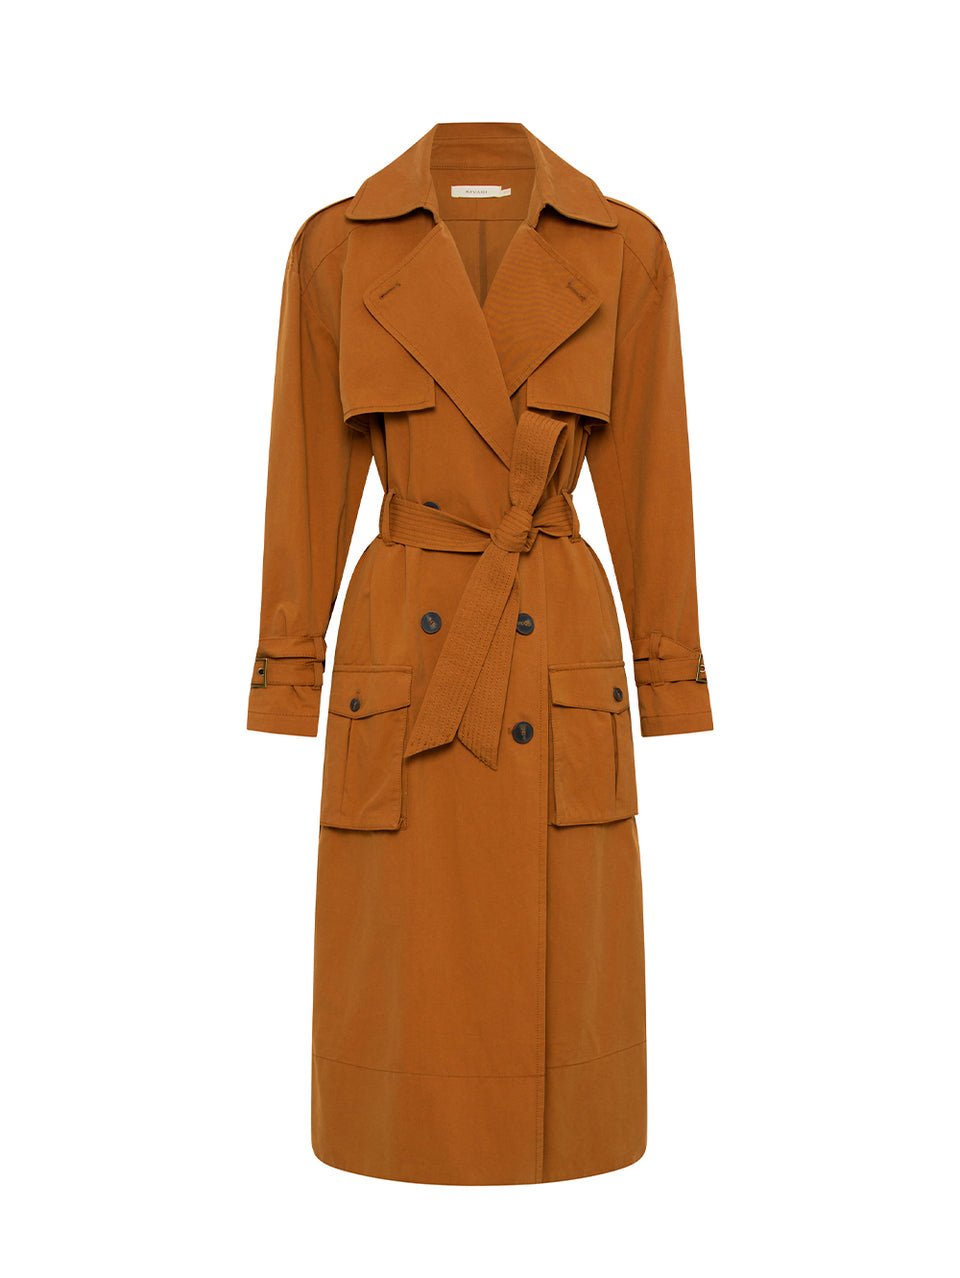 Carolina Trench Coat KIVARI | Burnt orange trench coat